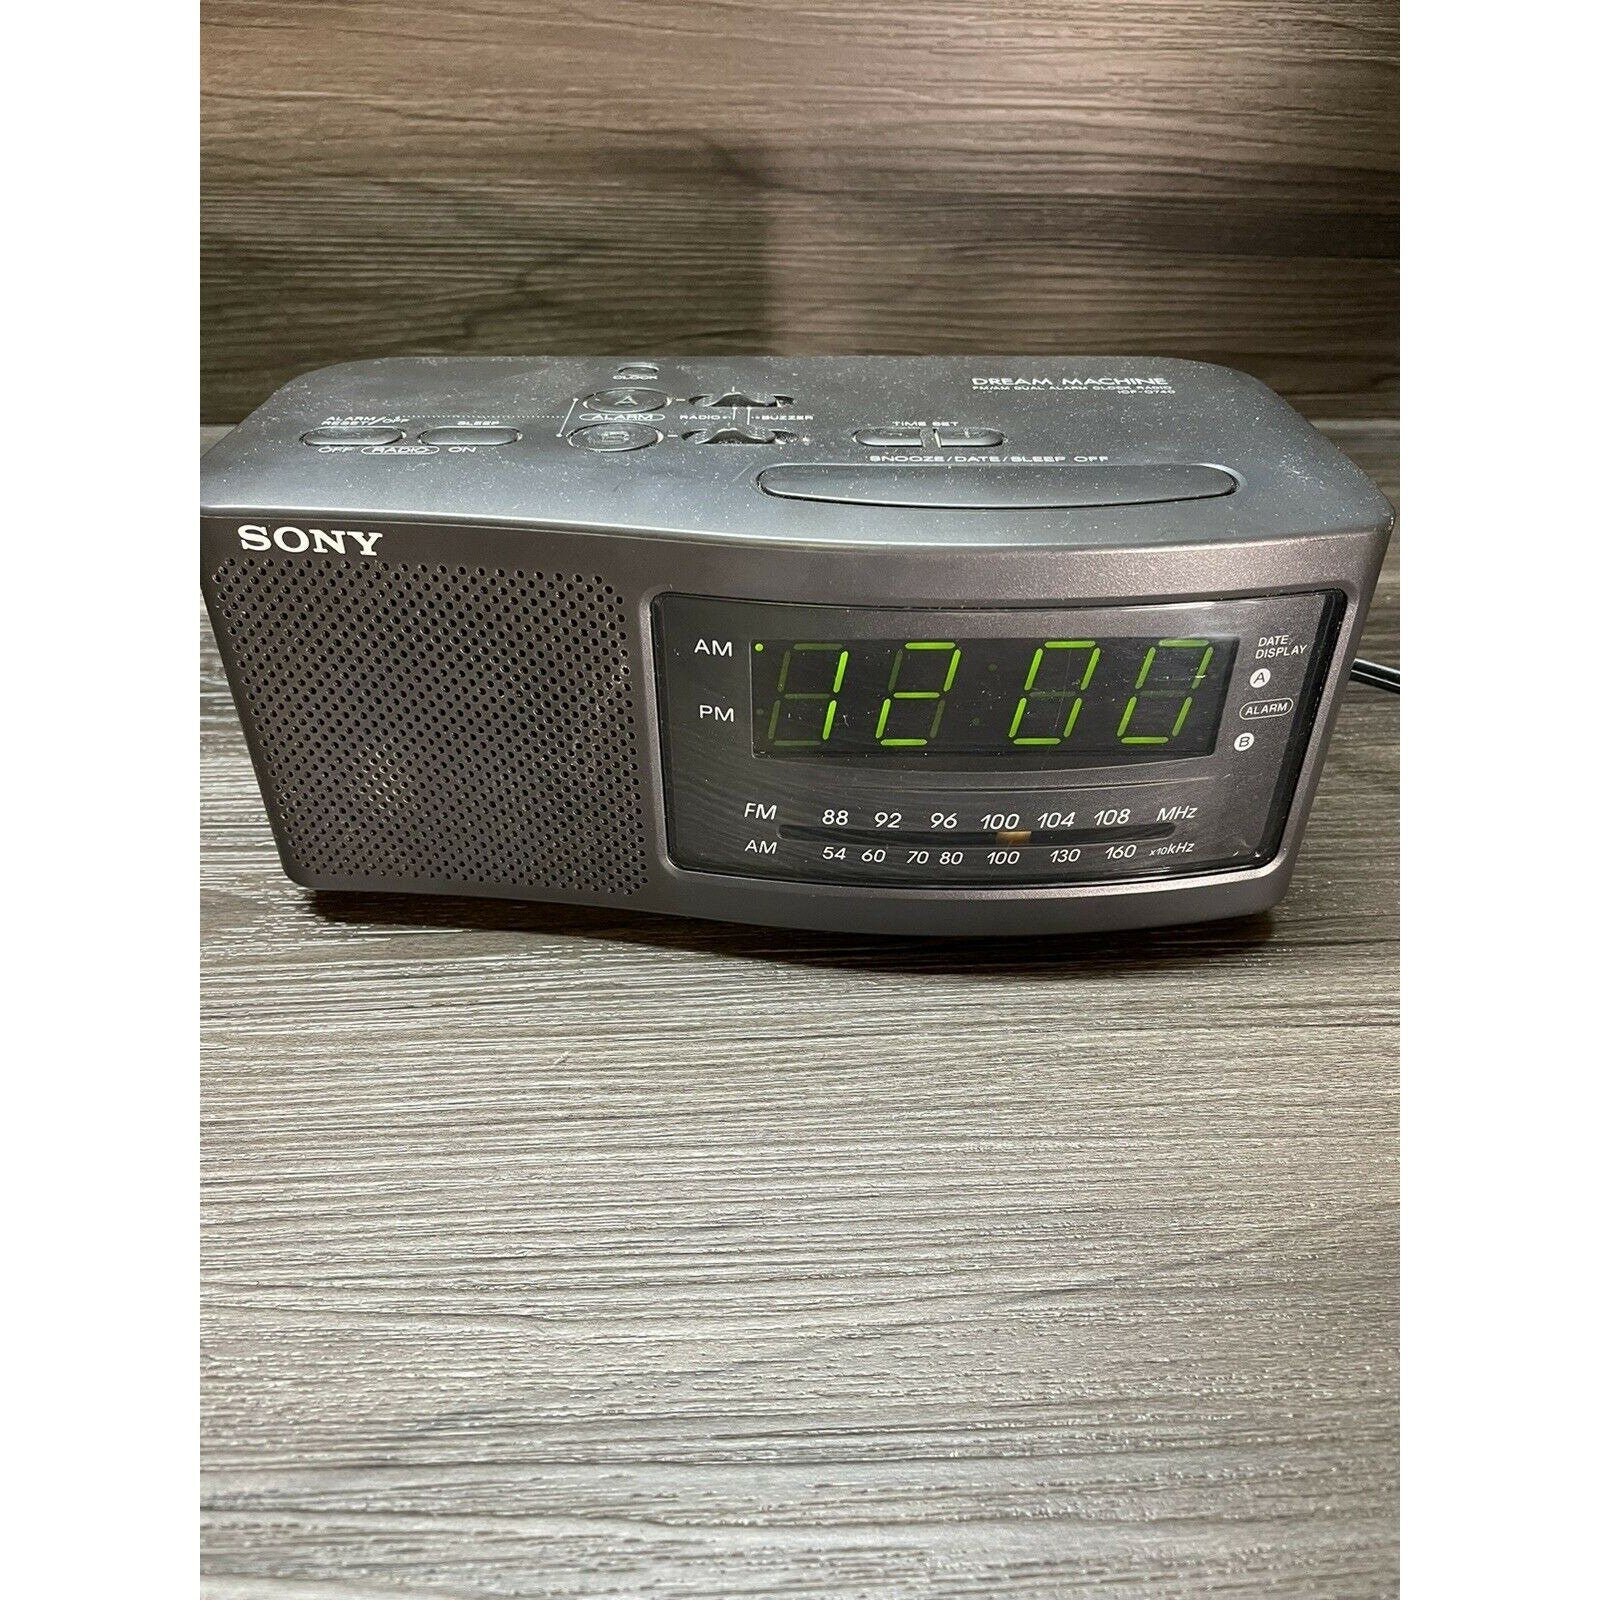 Sony ICF-C740 Dream Machine FM/AM Dual Alarm Clock Radio -Black